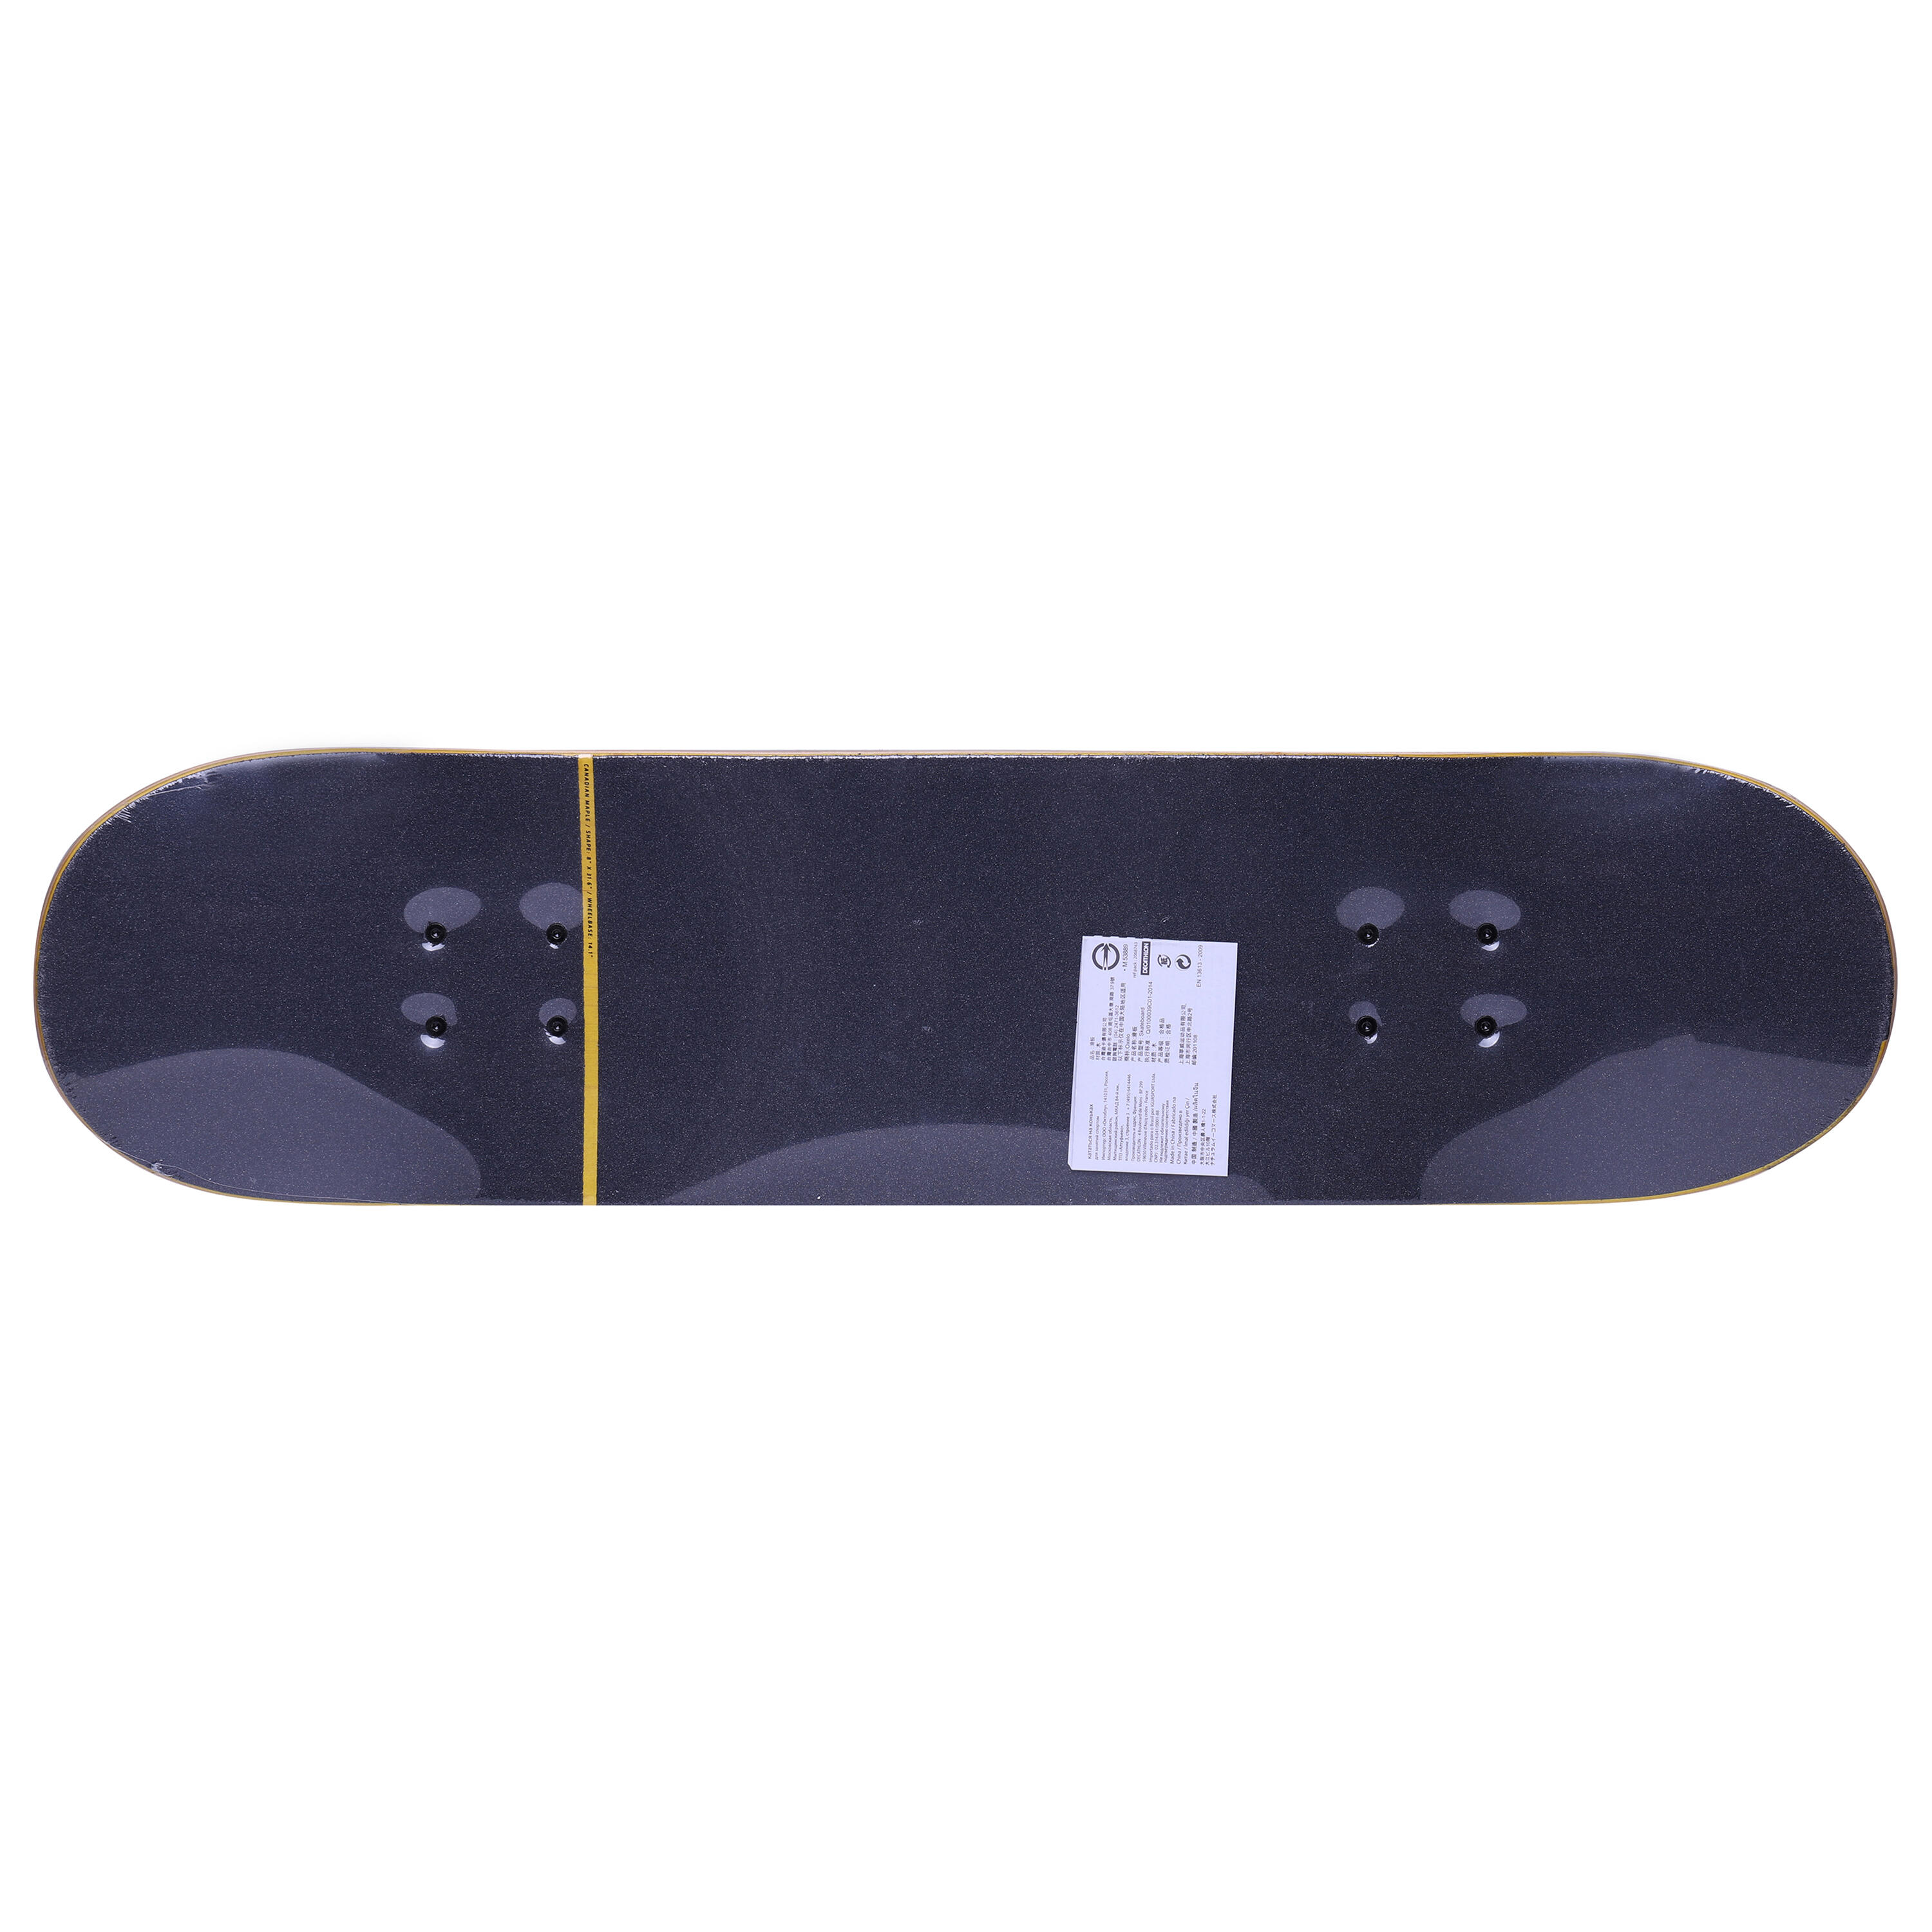 8" Skateboard Complete 500 - Bruce 9/10